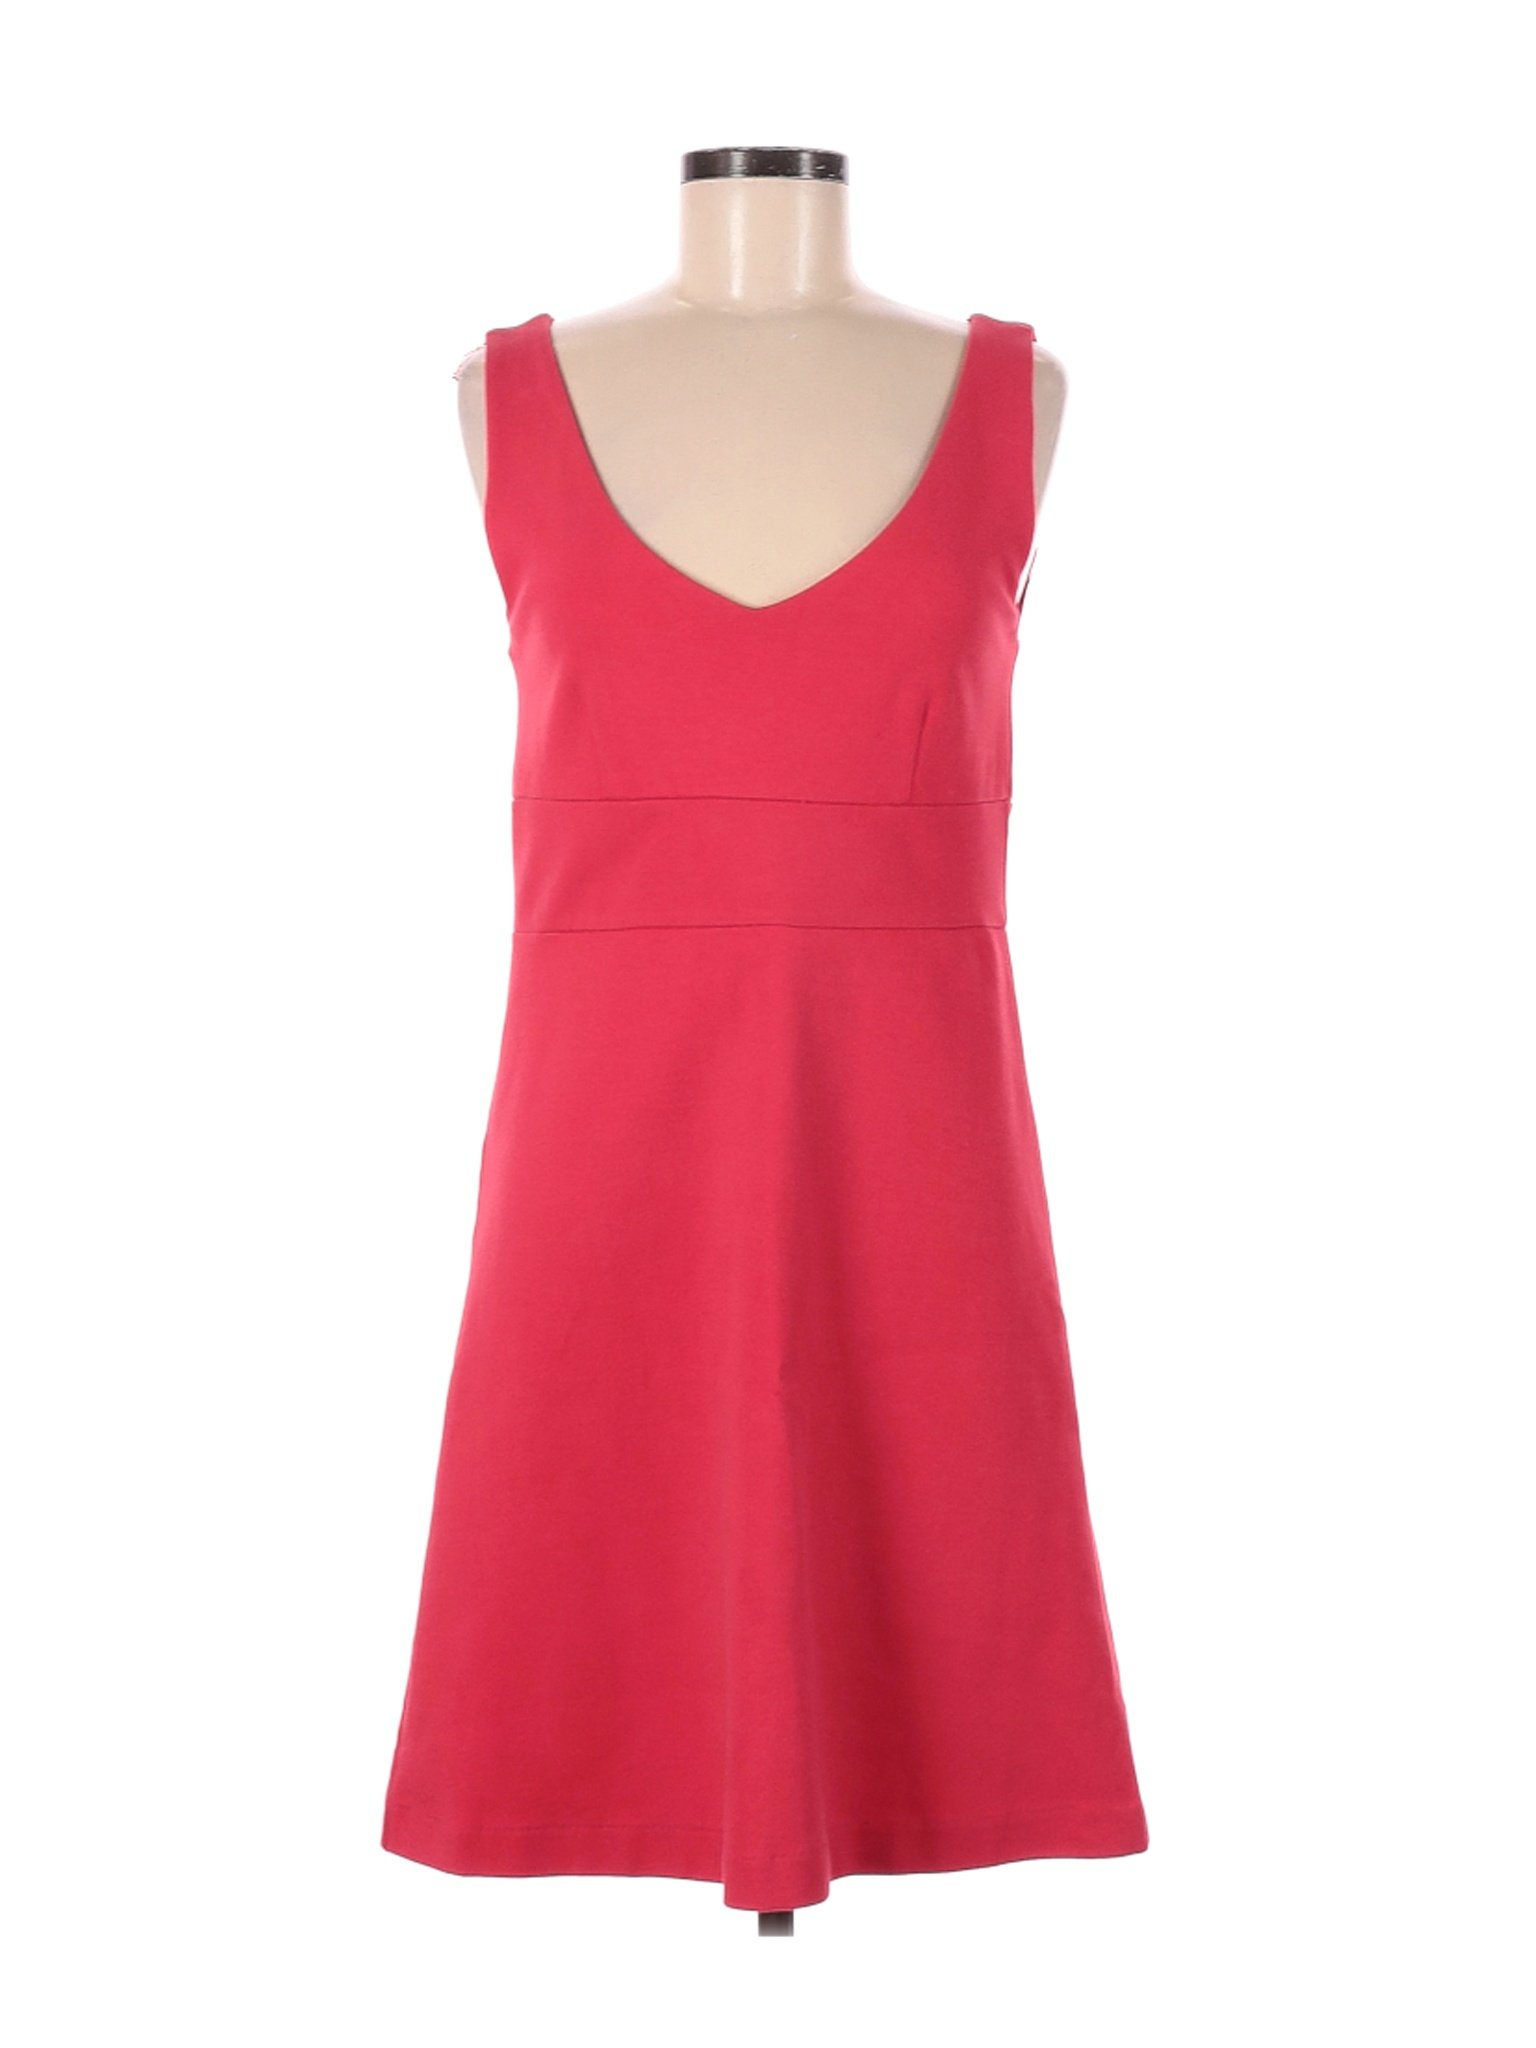 J.Crew Women Red Casual Dress 6 | eBay